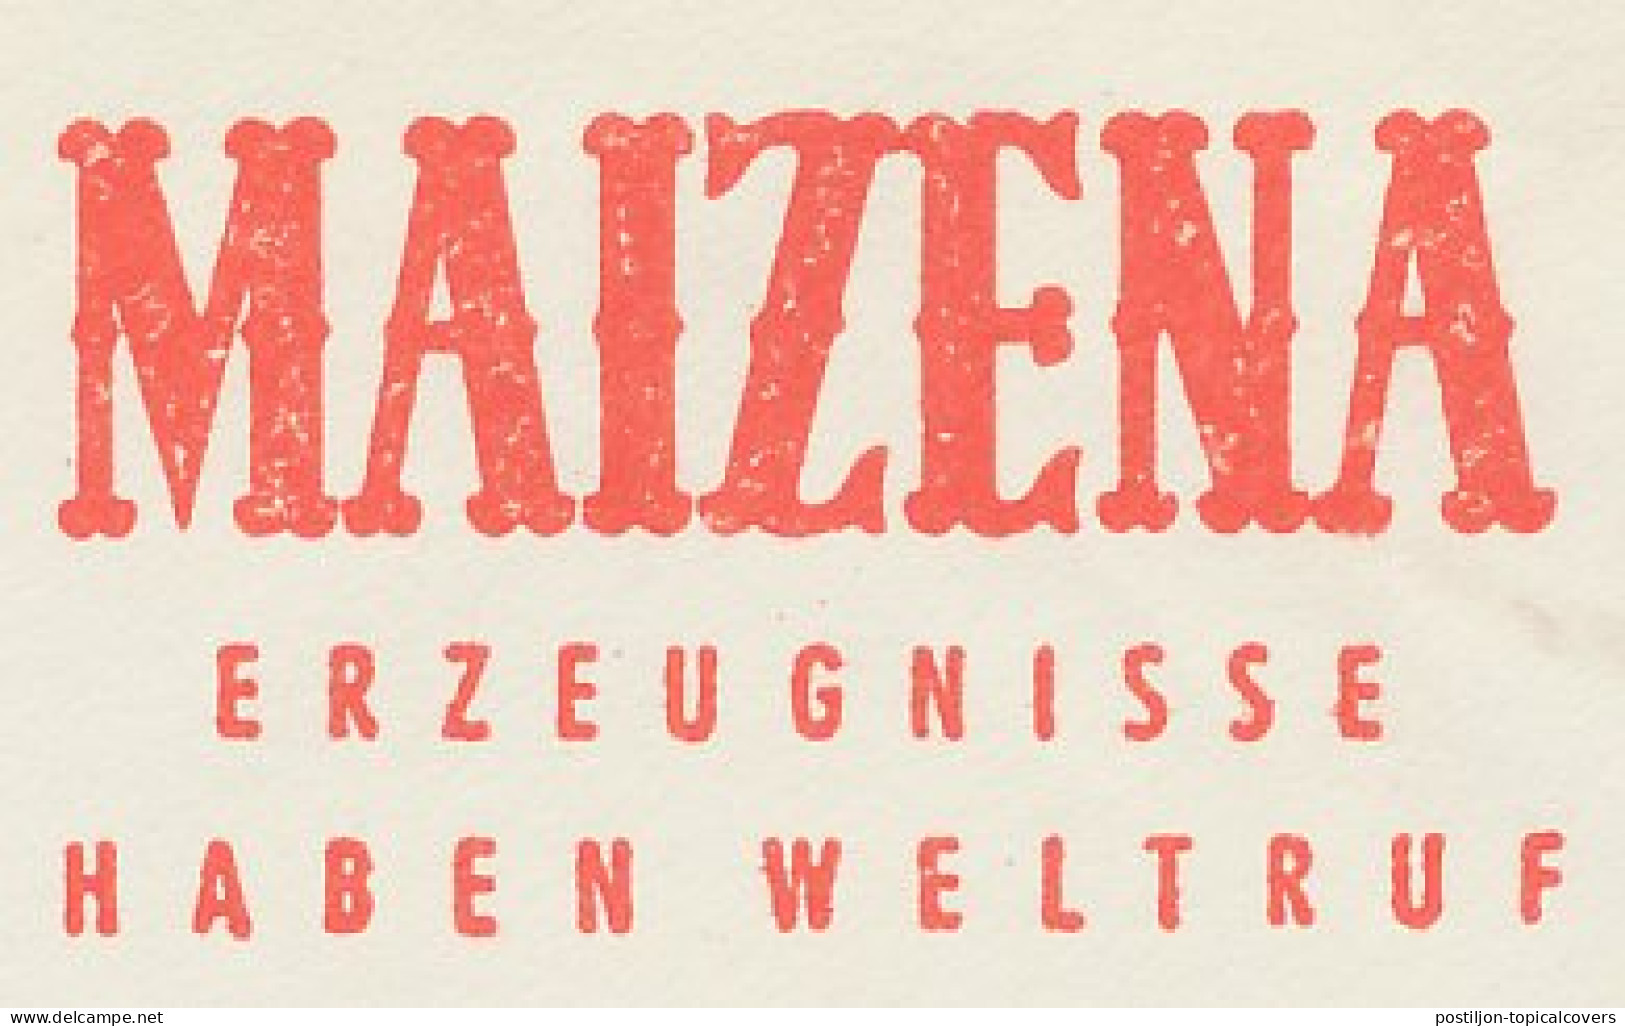 Meter Cut Germany 1954 Maizena - Corn Flour - Alimentation